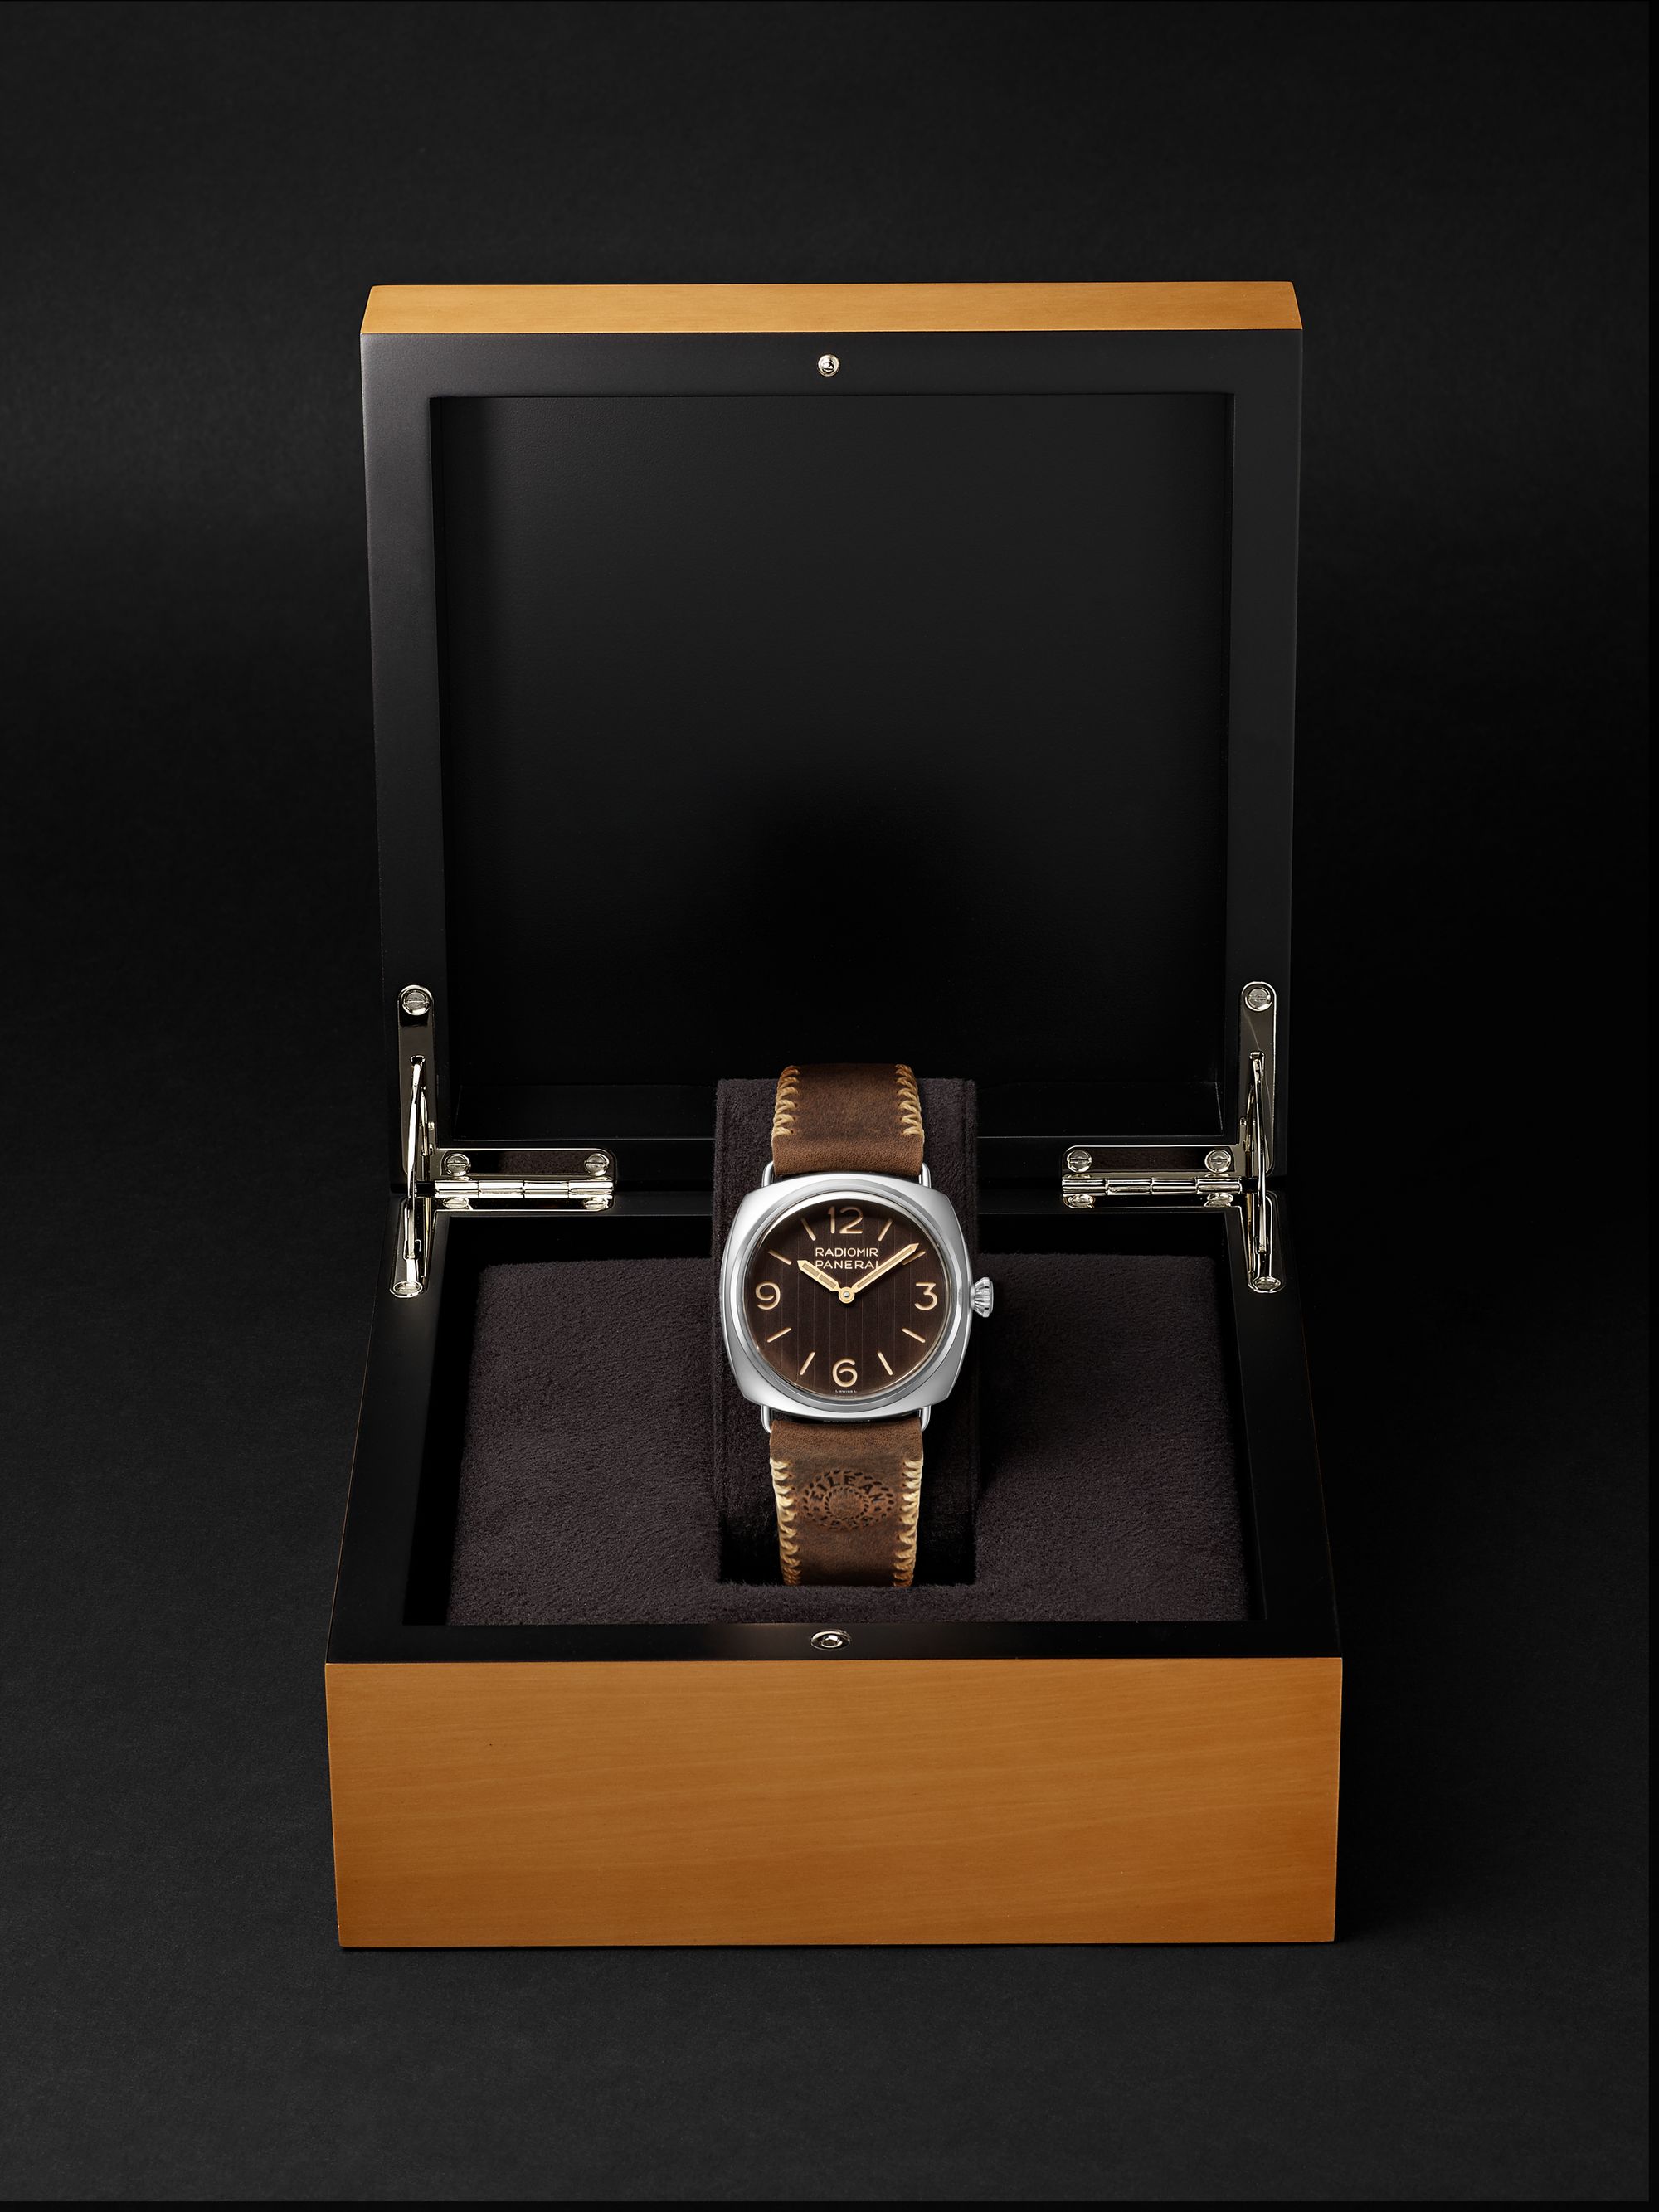 PANERAI Radionir Eilean Limited Edition Hand-Wound 45mm Stainless Steel and Leather Watch, Ref. No. PAM1243